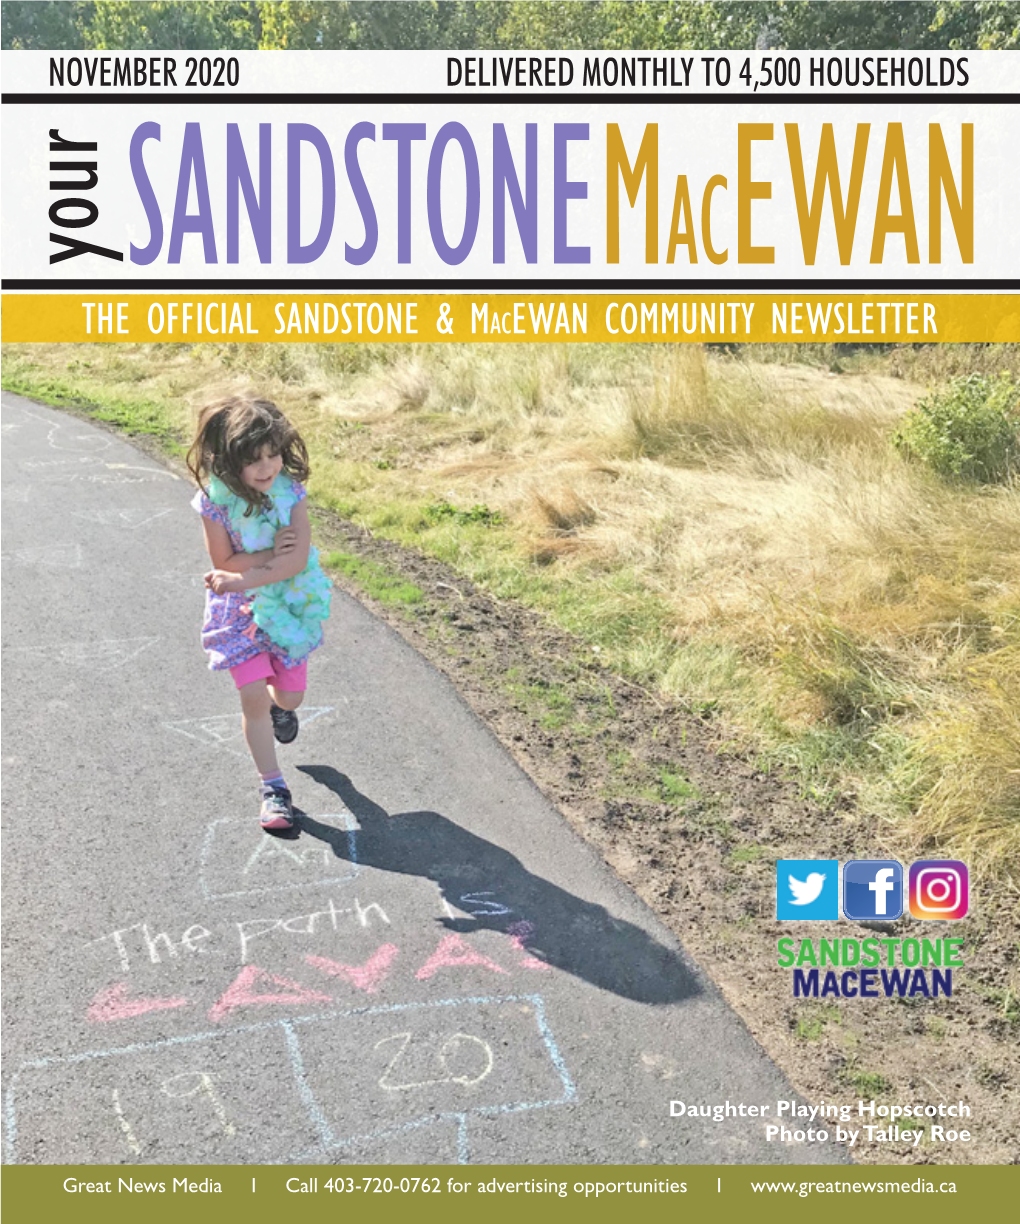 The Official Sandstone & Macewan Community